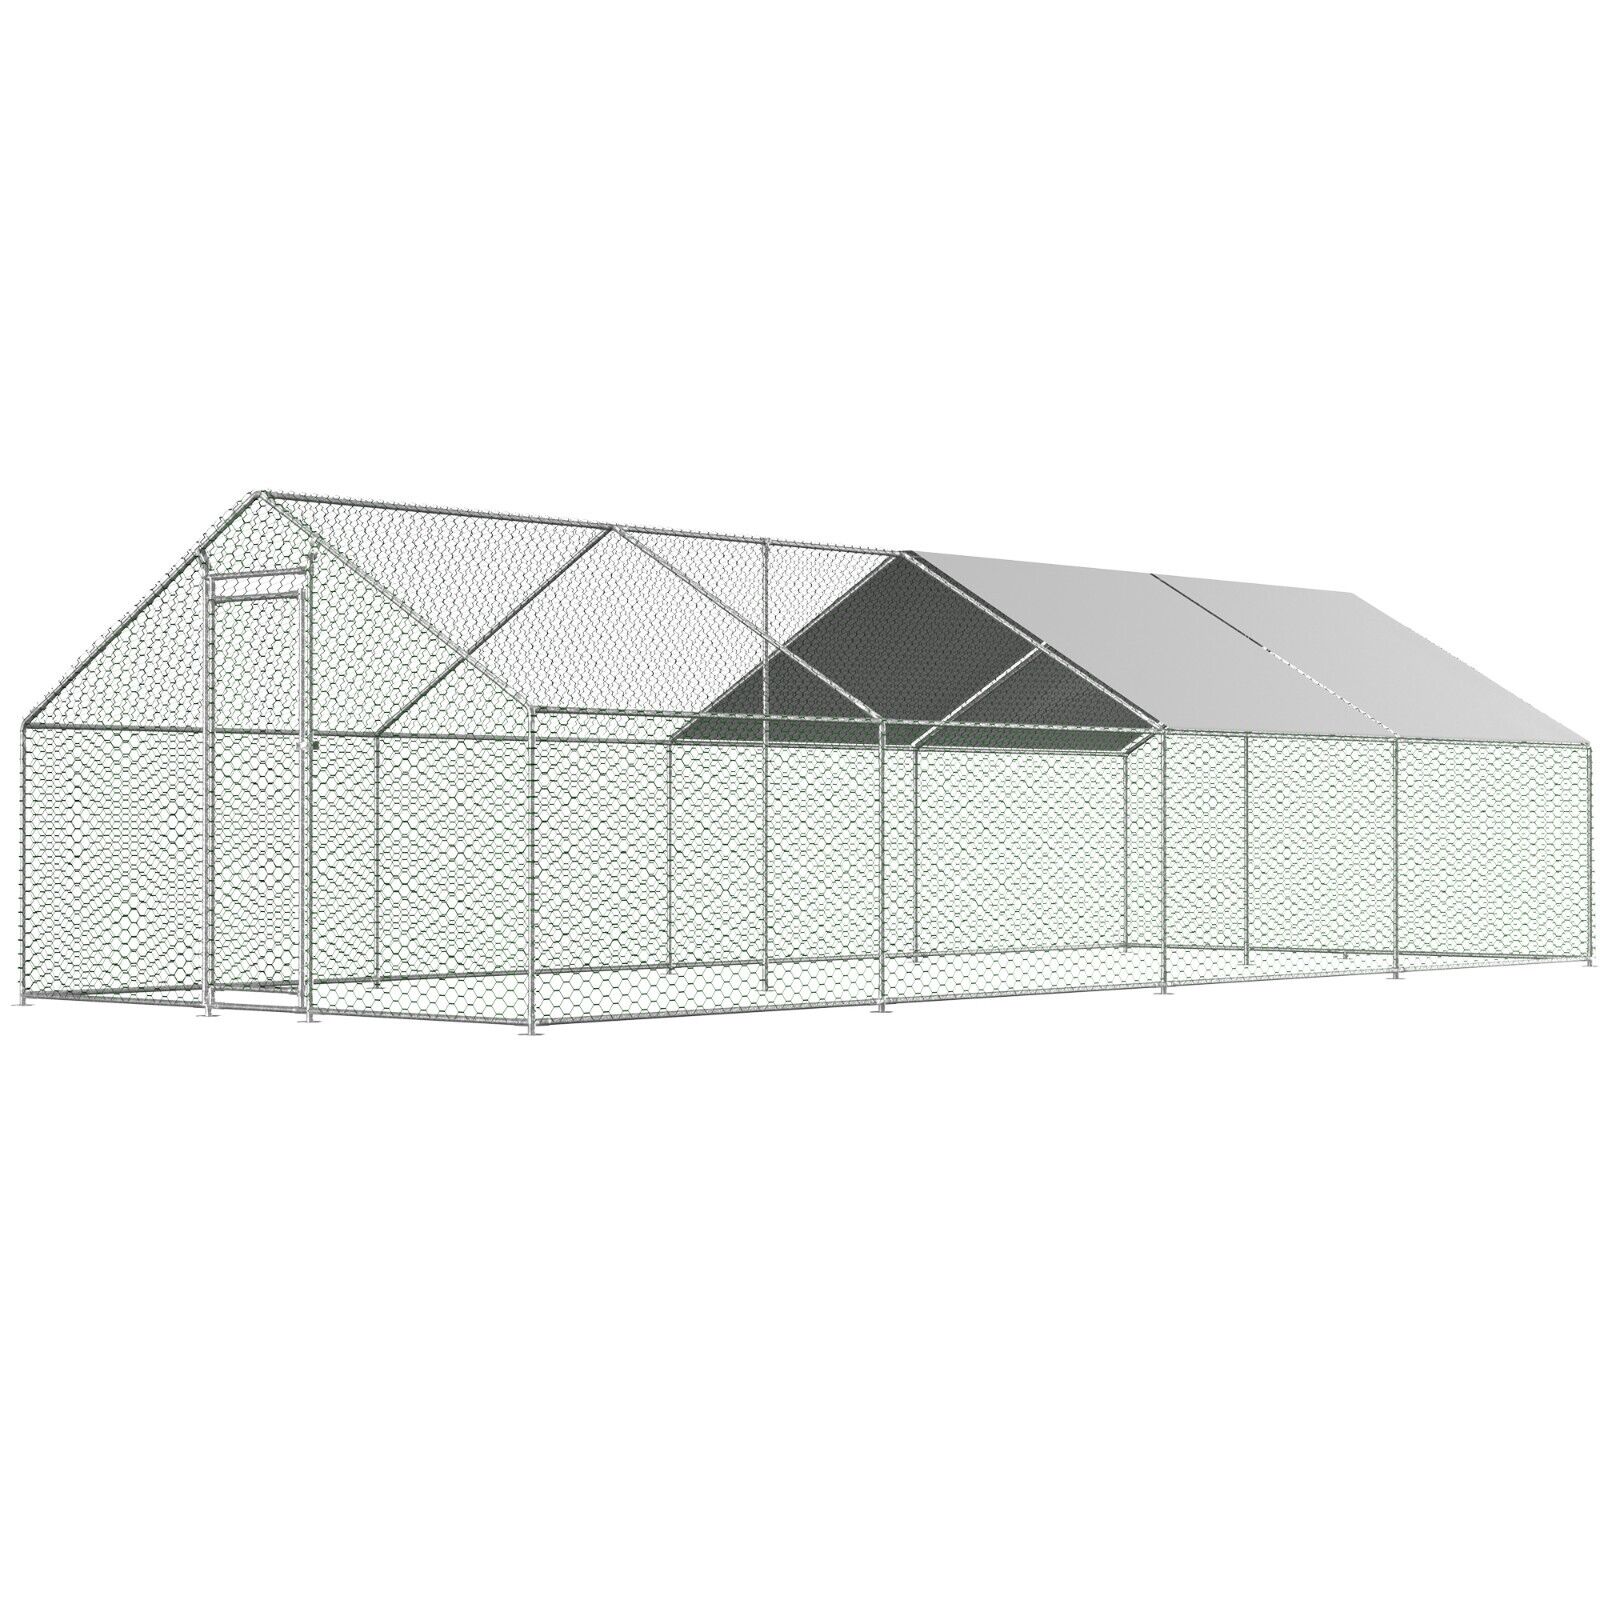 26ft x 10ft Metal Walk In Chicken Coop Run Cage Rabbit Hutch Hen House Enclosure